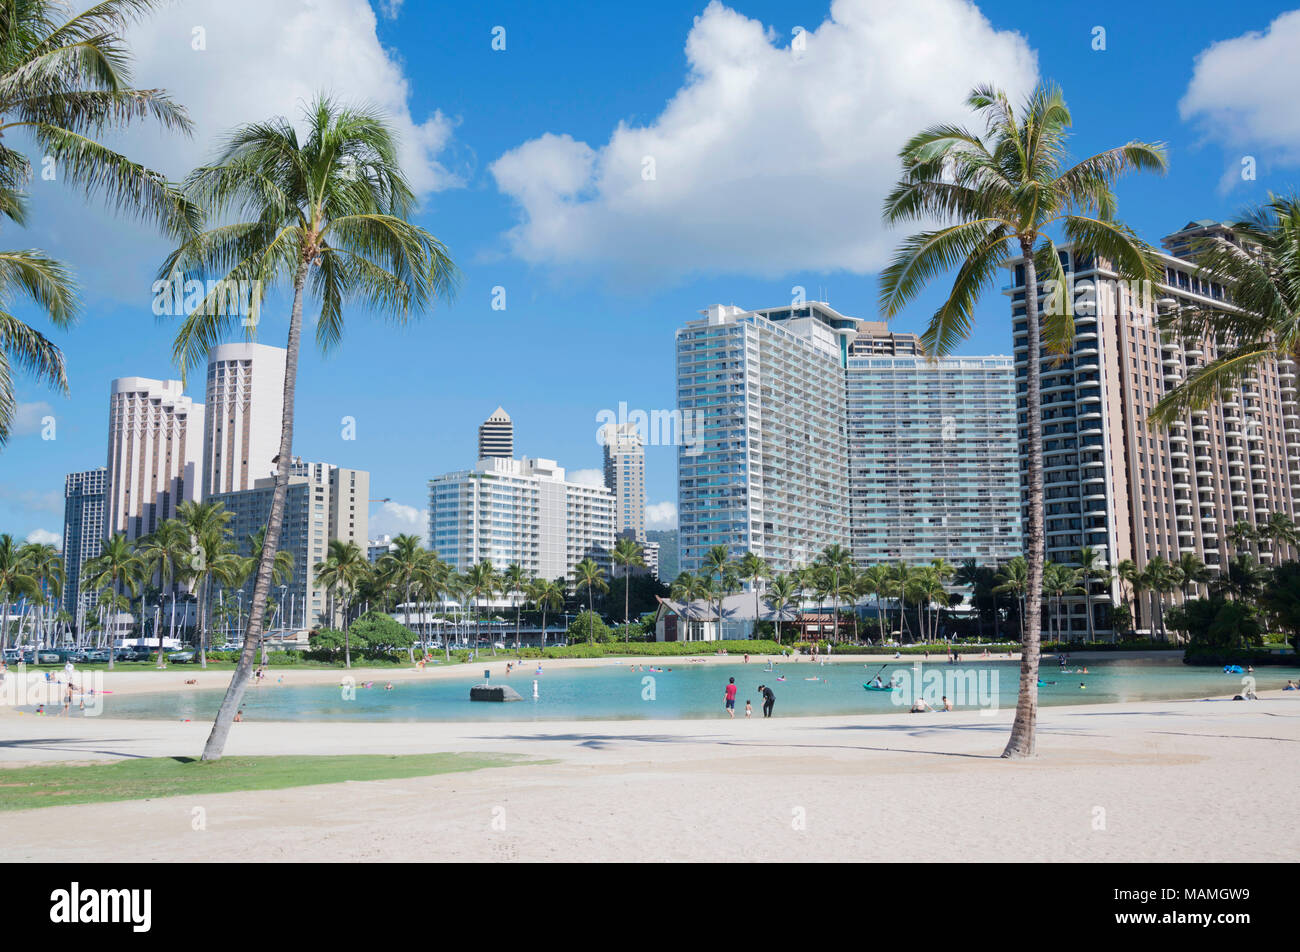 Waikiki è un famoso e romantico resort turistico in Oahu, Hawaii. I turisti, palme, sole e spiaggia di Waikiki di Oahu, Hawaii Feb 1, 2018: Foto Stock